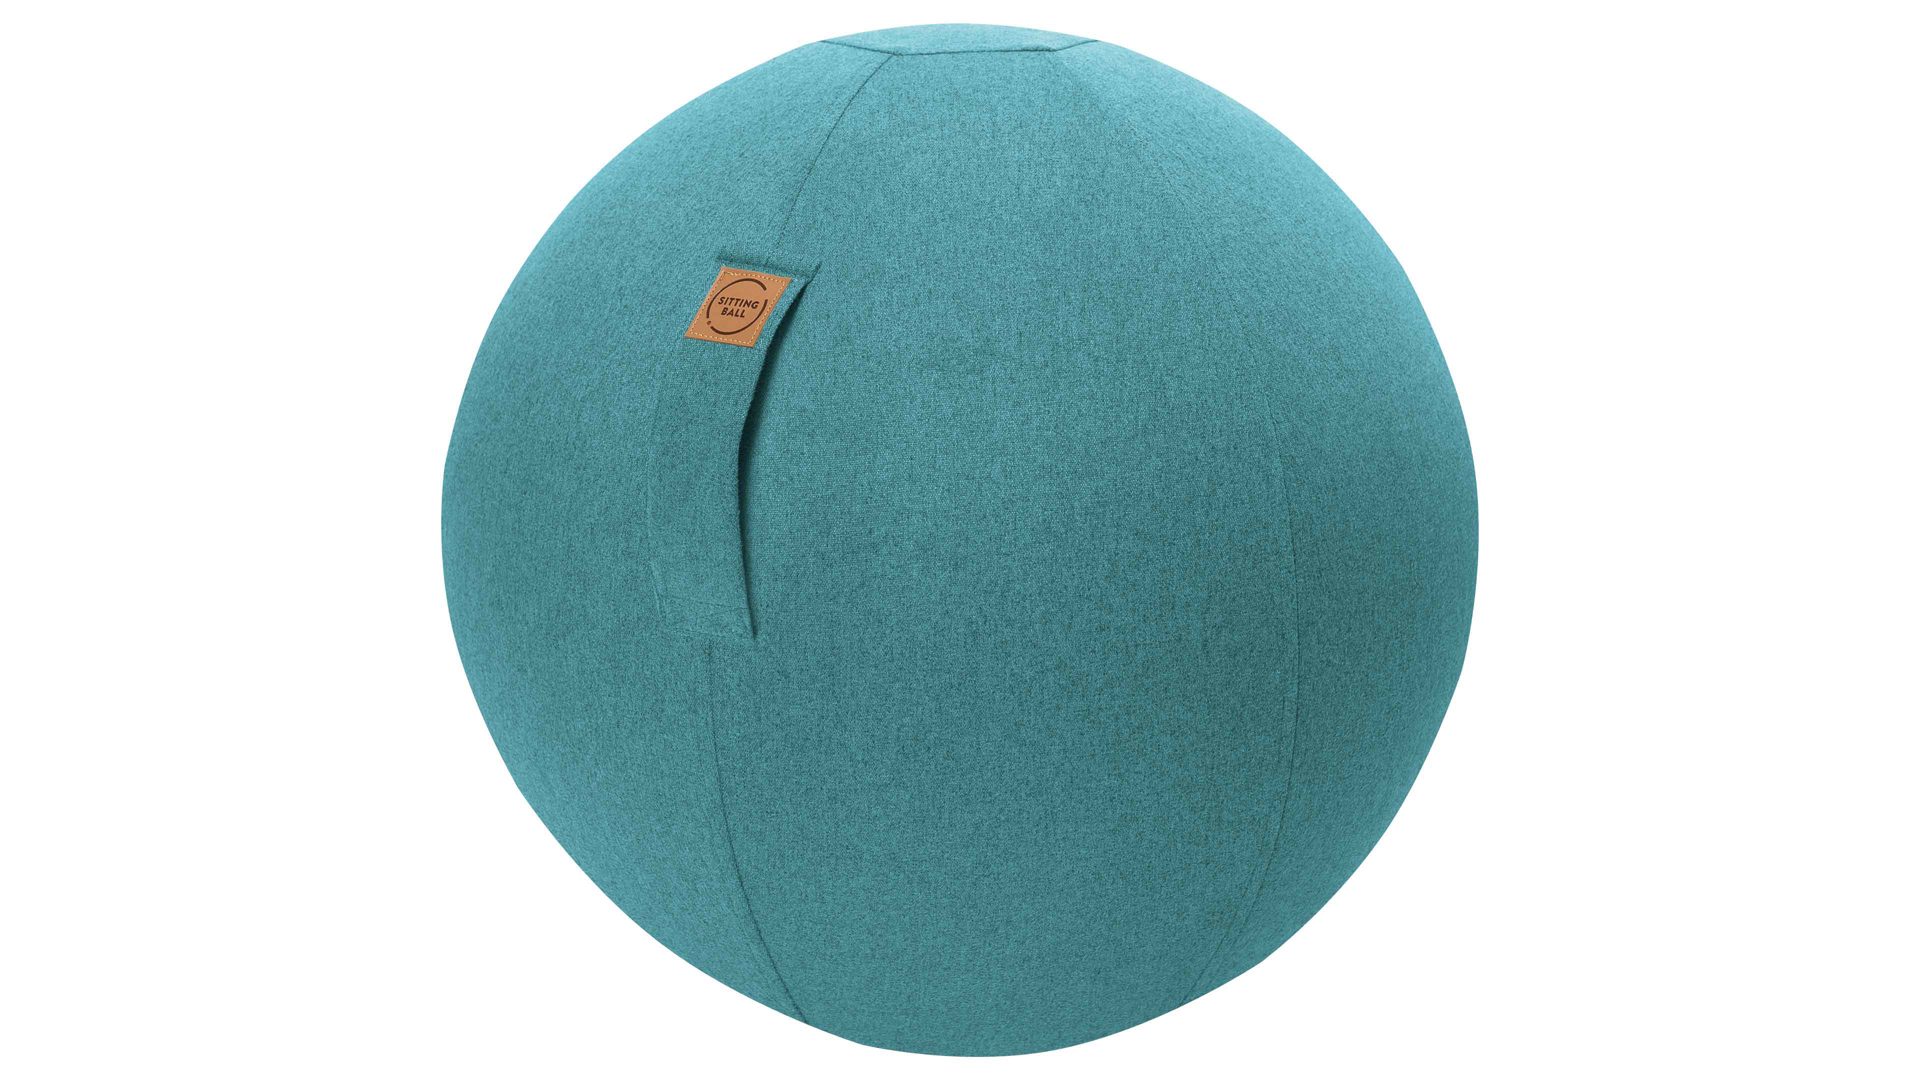 Sitzball Magma sitting point aus Kunstfaser in Türkis SITTING BALL® Felt aquariusfarbener Bezug – Durchmesser ca. 65 cm